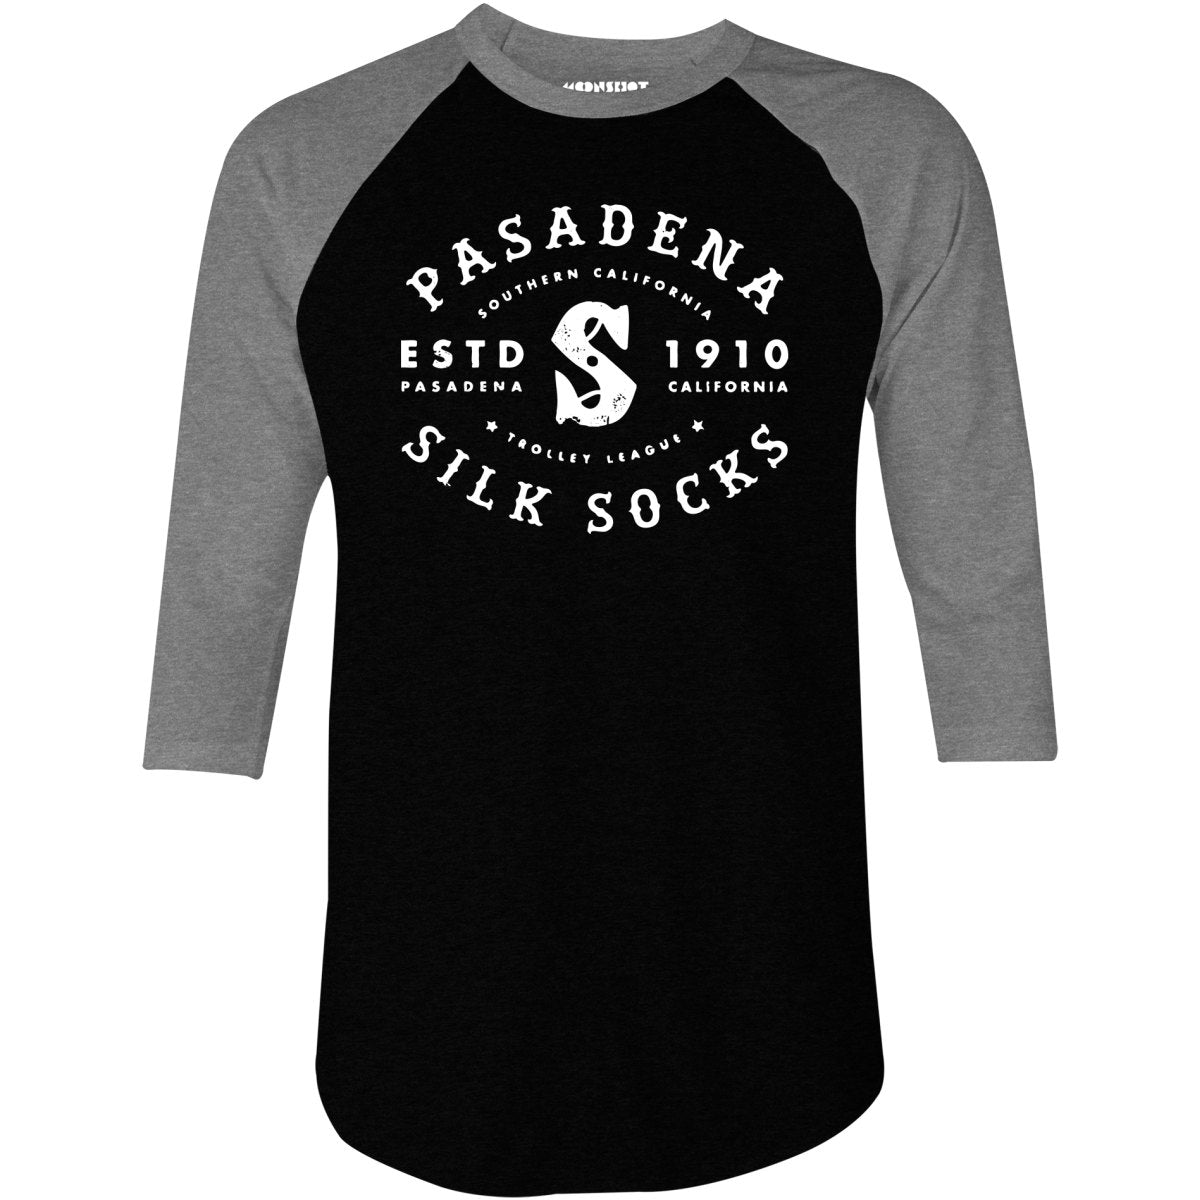 Pasadena Silk Socks - California - Vintage Defunct Baseball Teams - 3/4 Sleeve Raglan T-Shirt